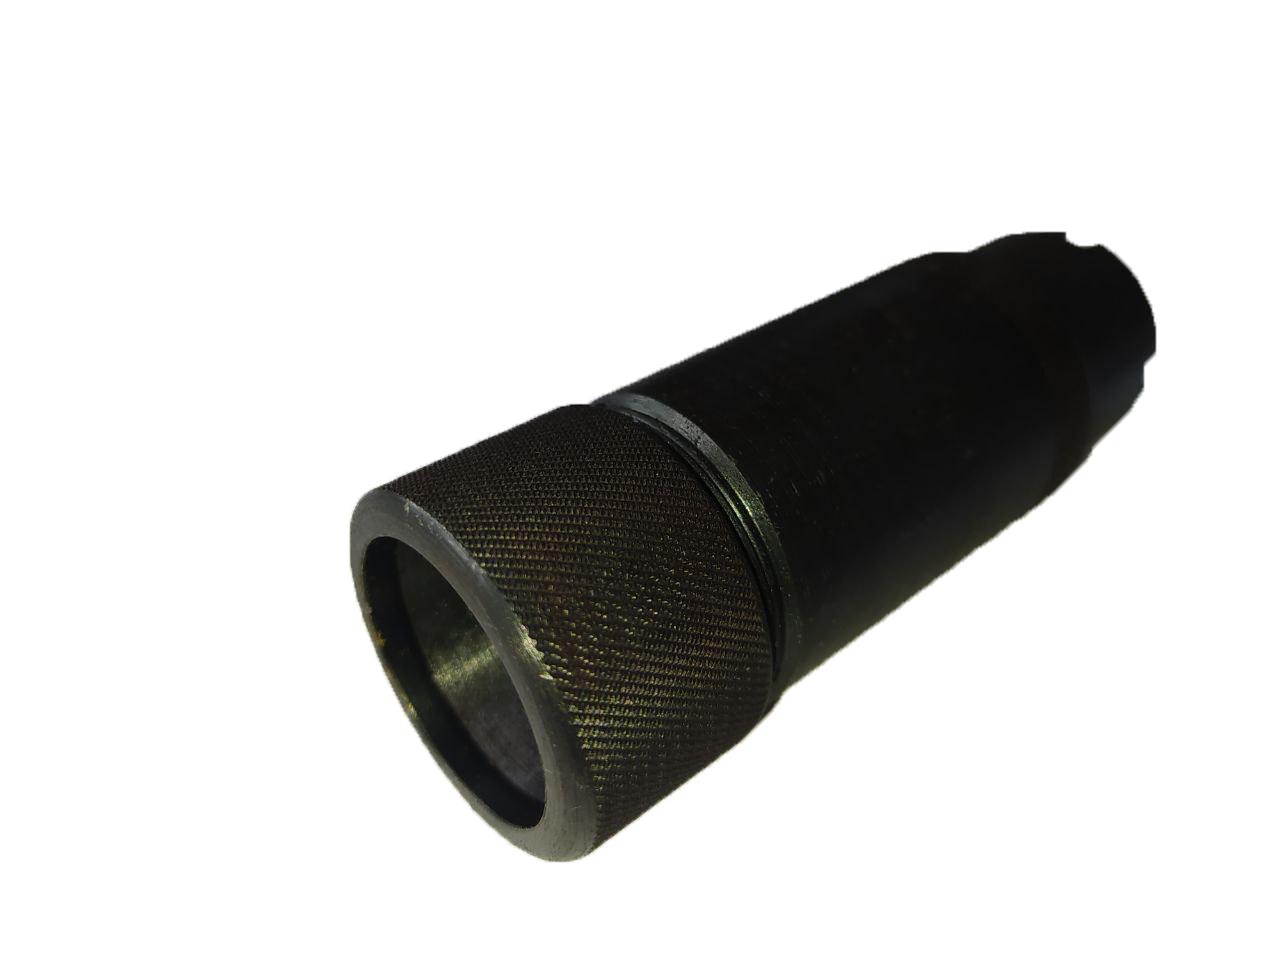 Полум'ягасник для АК калібр 5,45 діаметр 36 мм - фото 